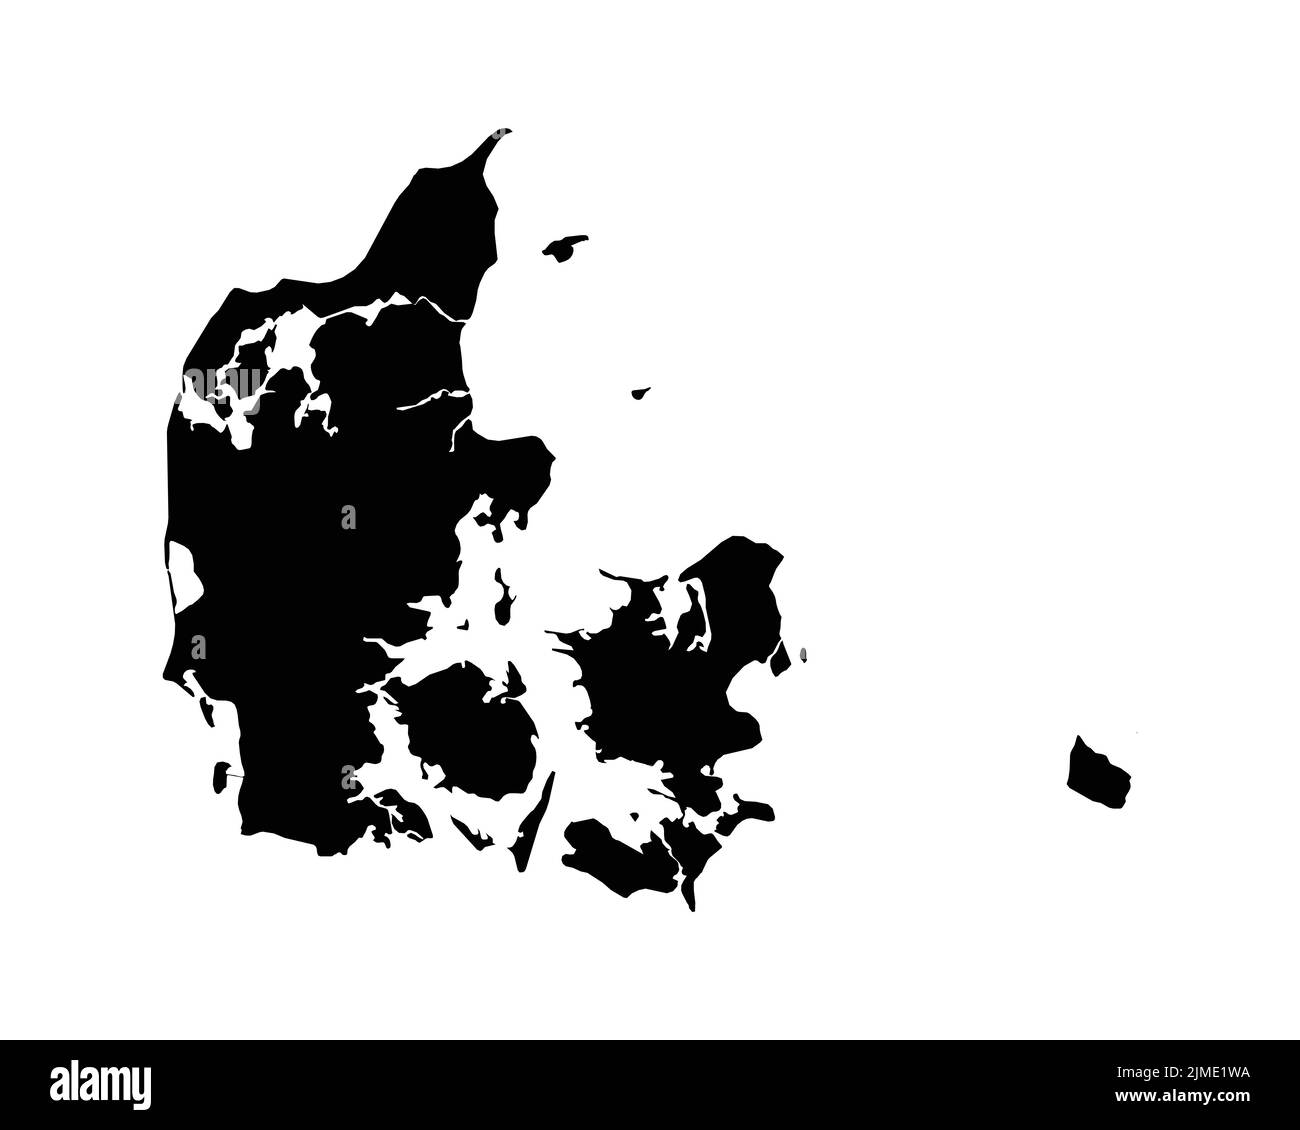 Denmark Map. Danish Country Map. Dane Black and White National Outline Geography Border Boundary Shape Territory EPS Vector Illustration Clipart Stock Vector